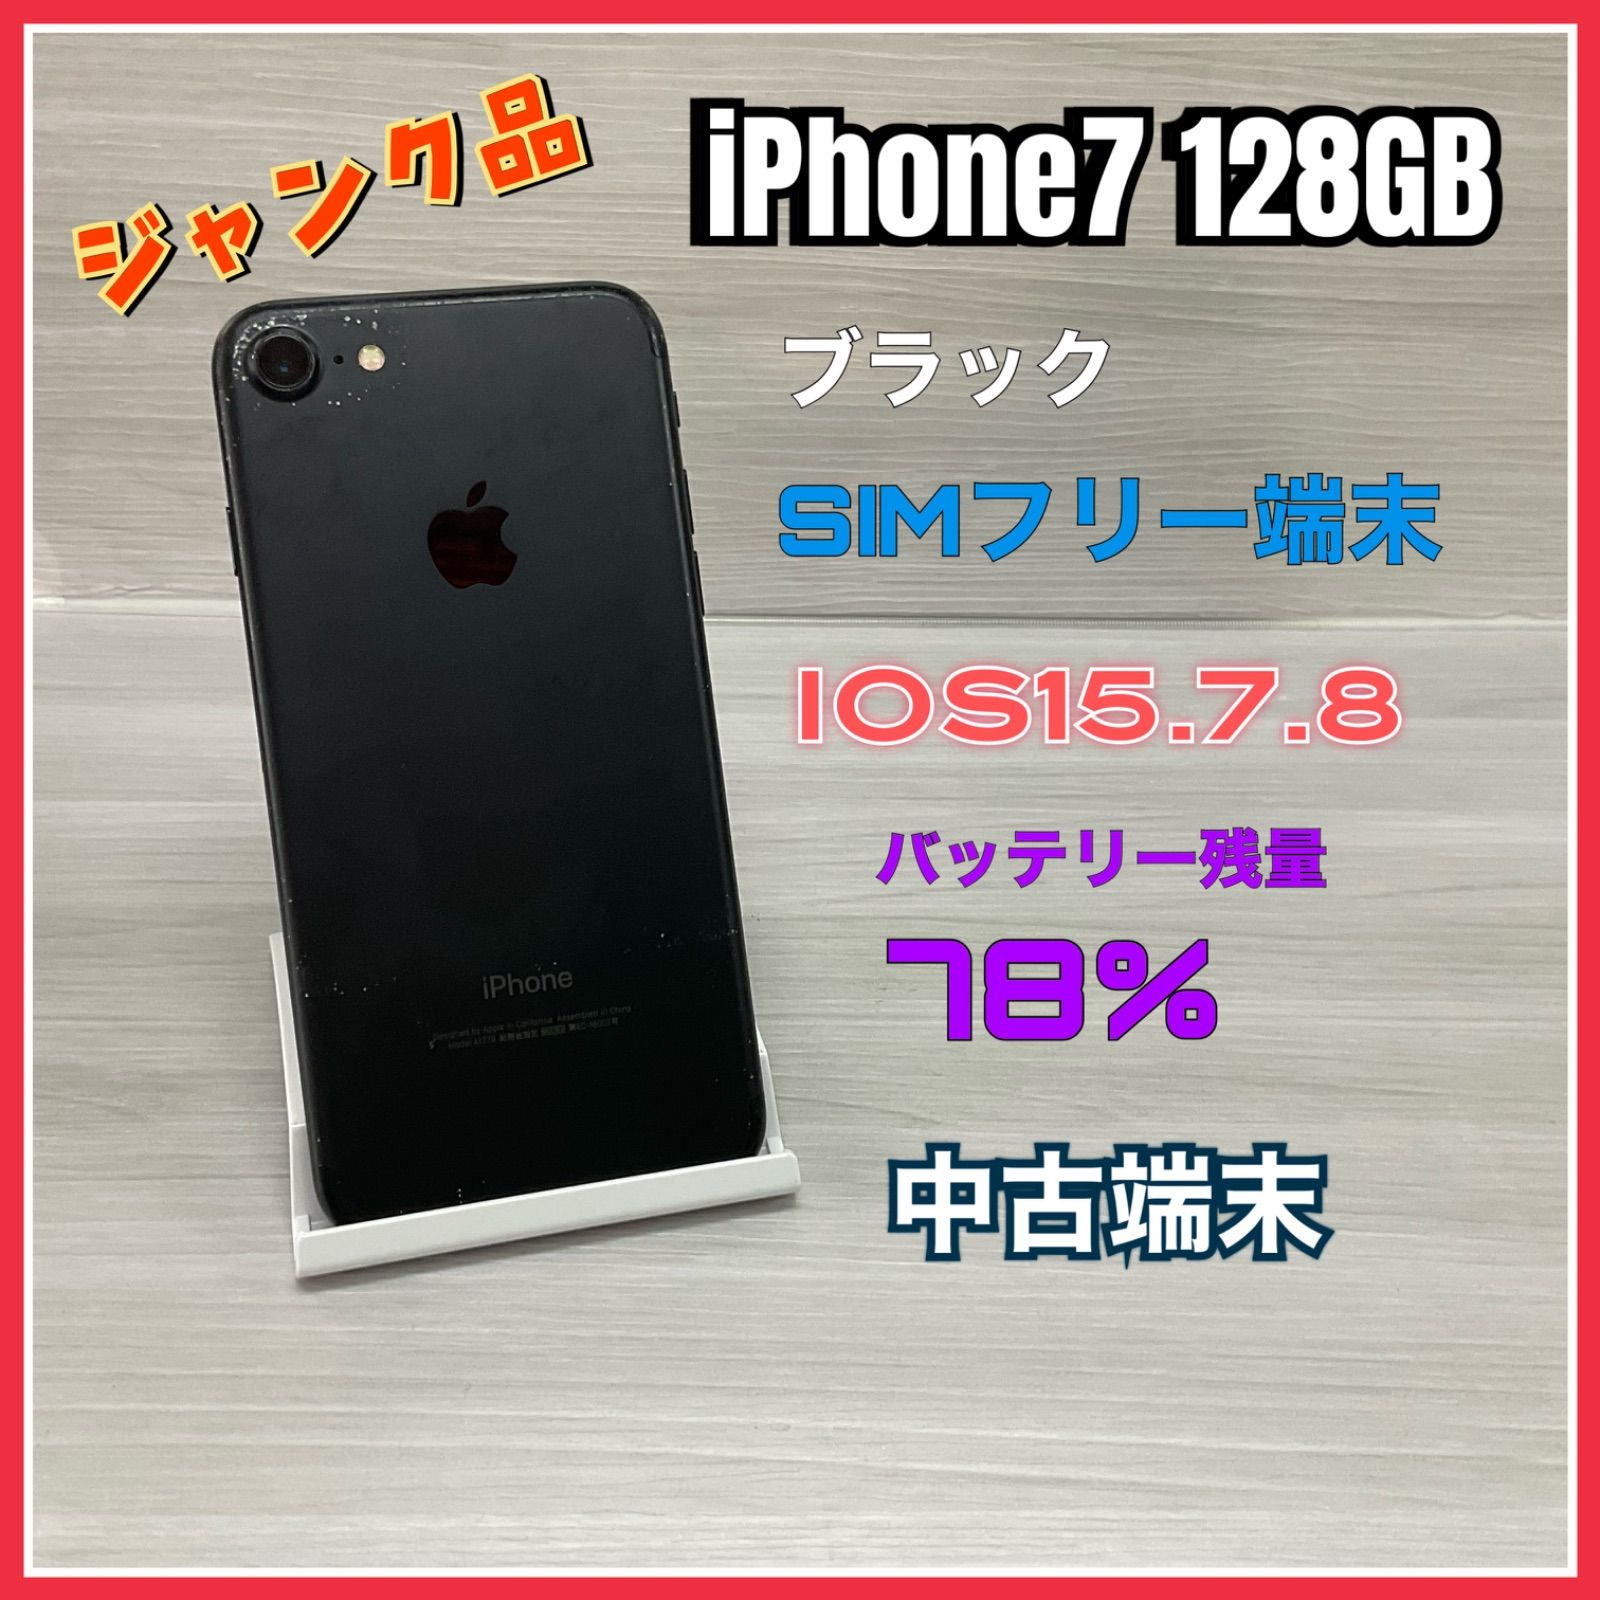 iPhone７ 128GB SIMロック解除済み - スマートフォン本体